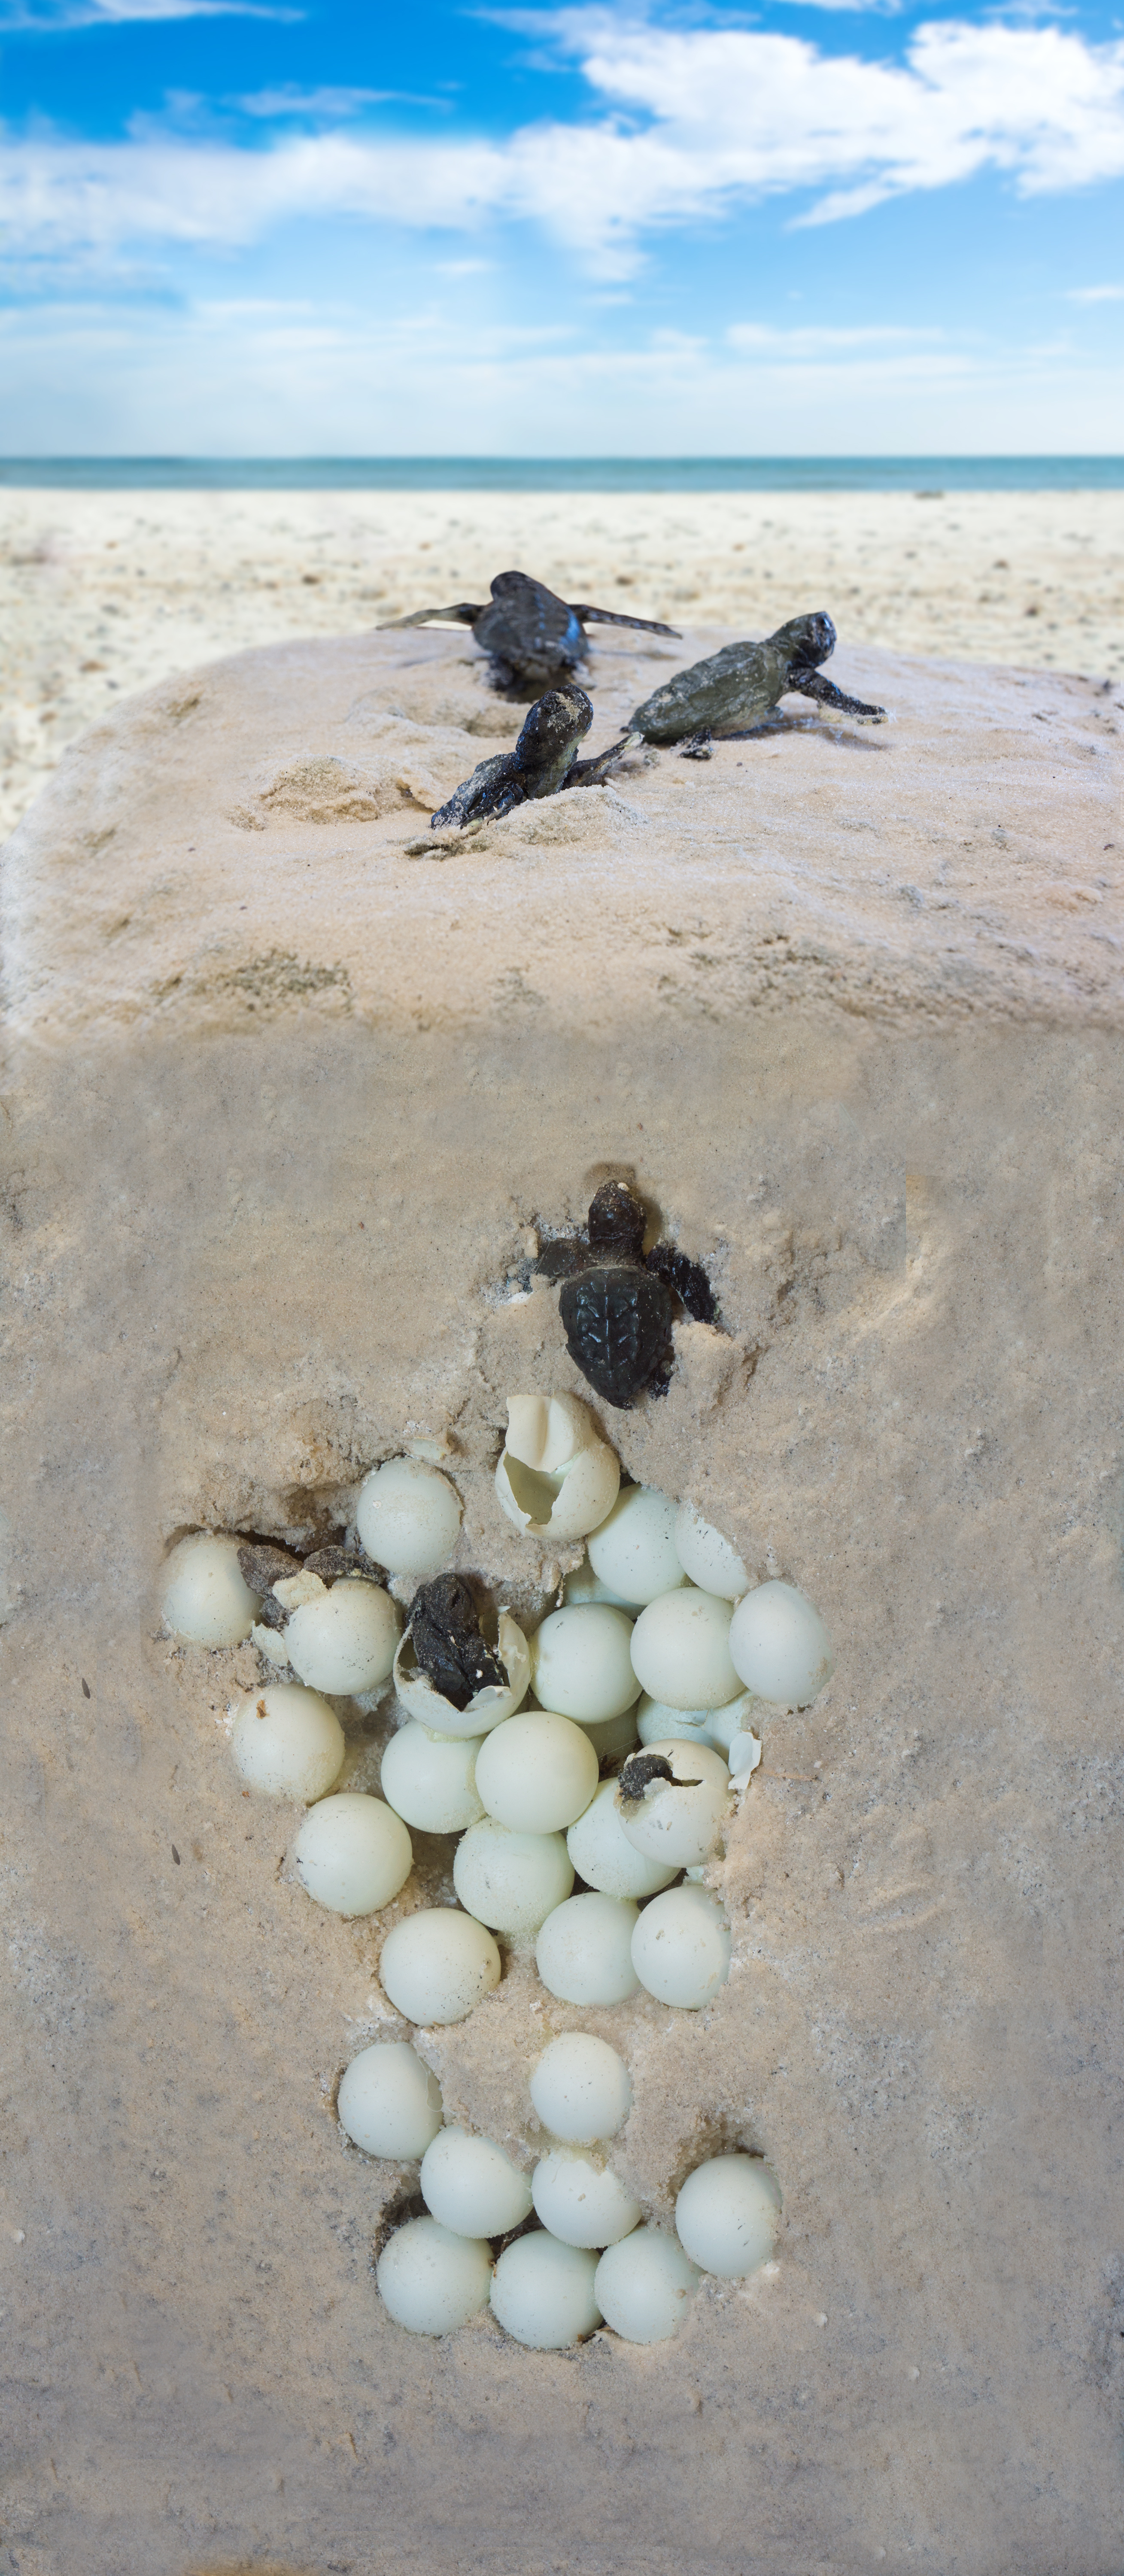 Life Cycle Of A Loggerhead Sea Turtle Jacksonville Beach, Florida